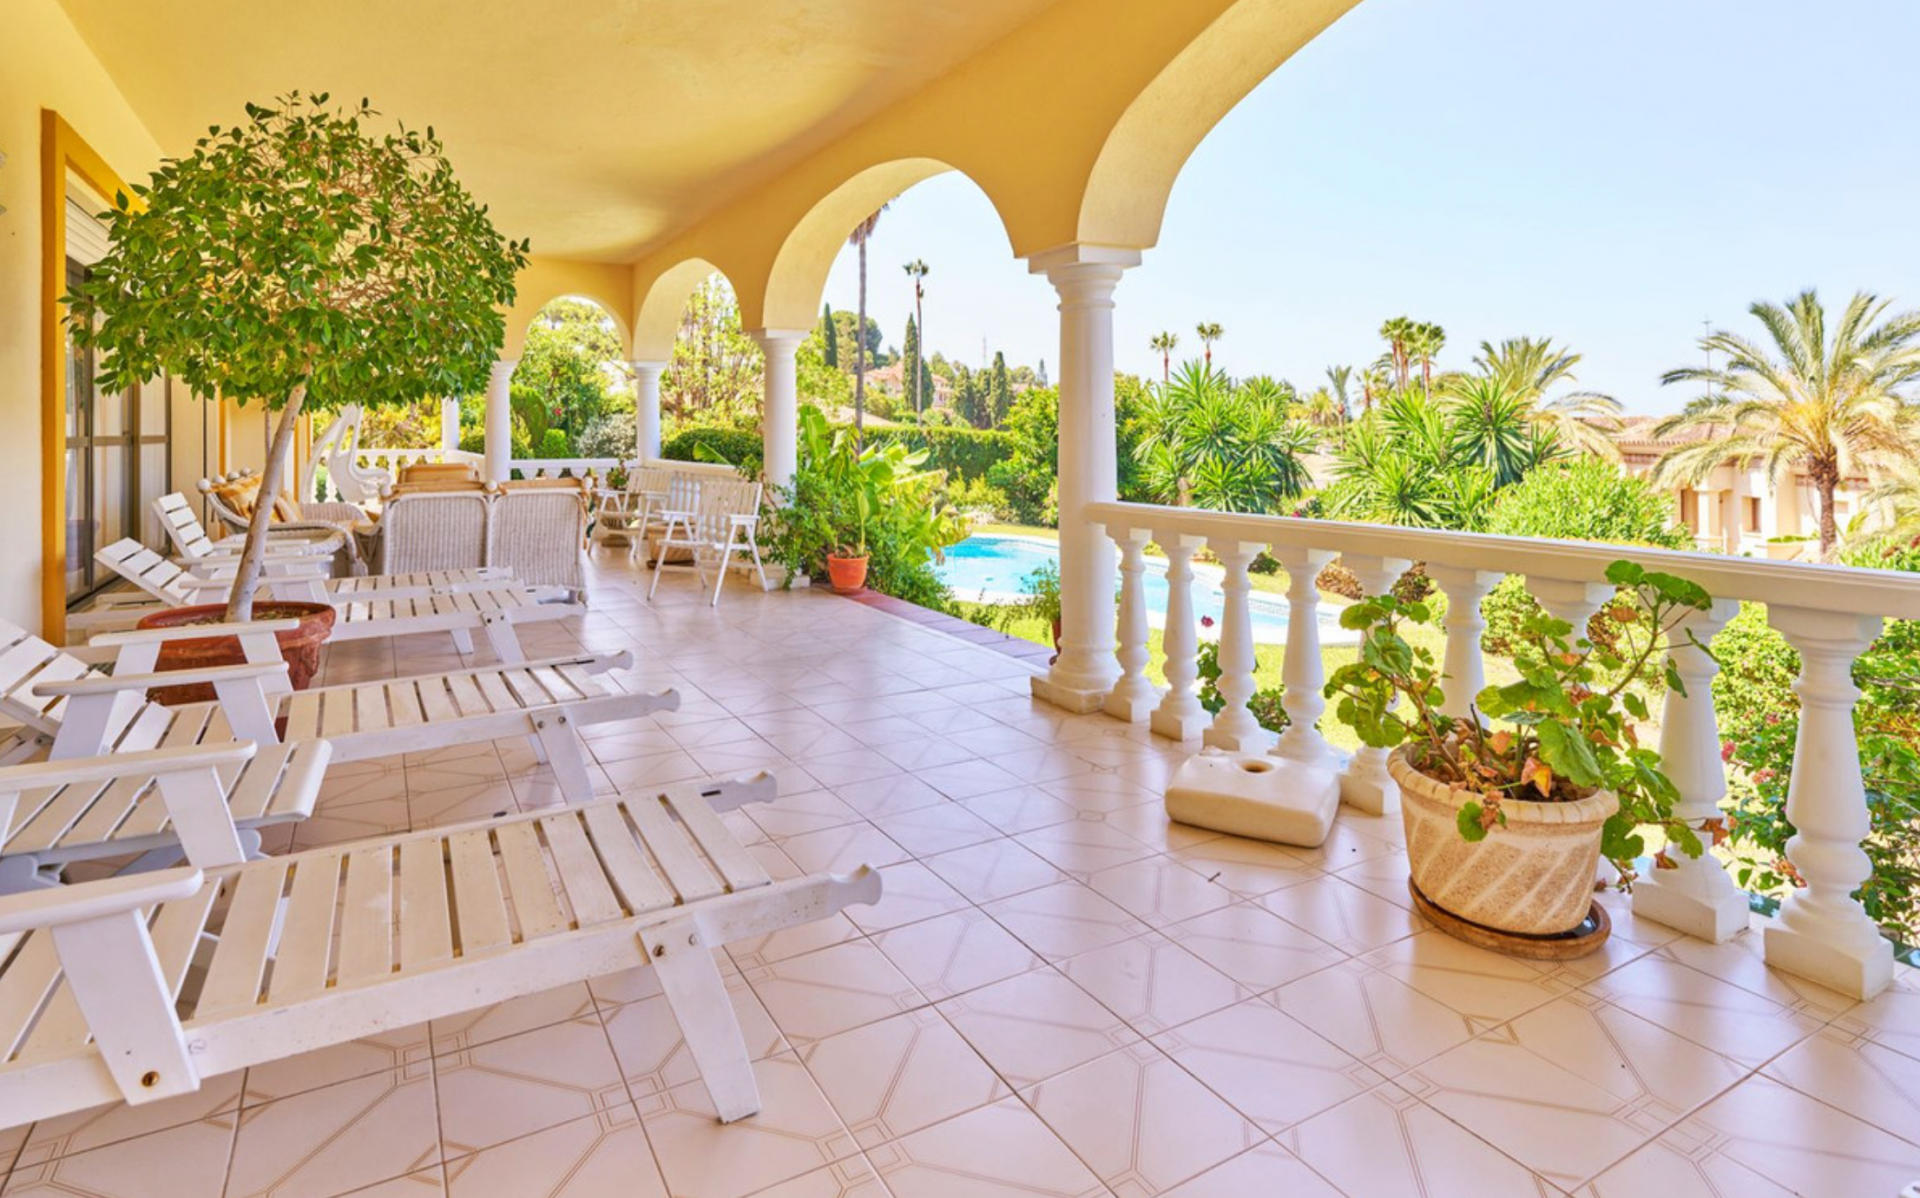 Andalusian-style villa, facing South, set in a quiet area of El Paraiso